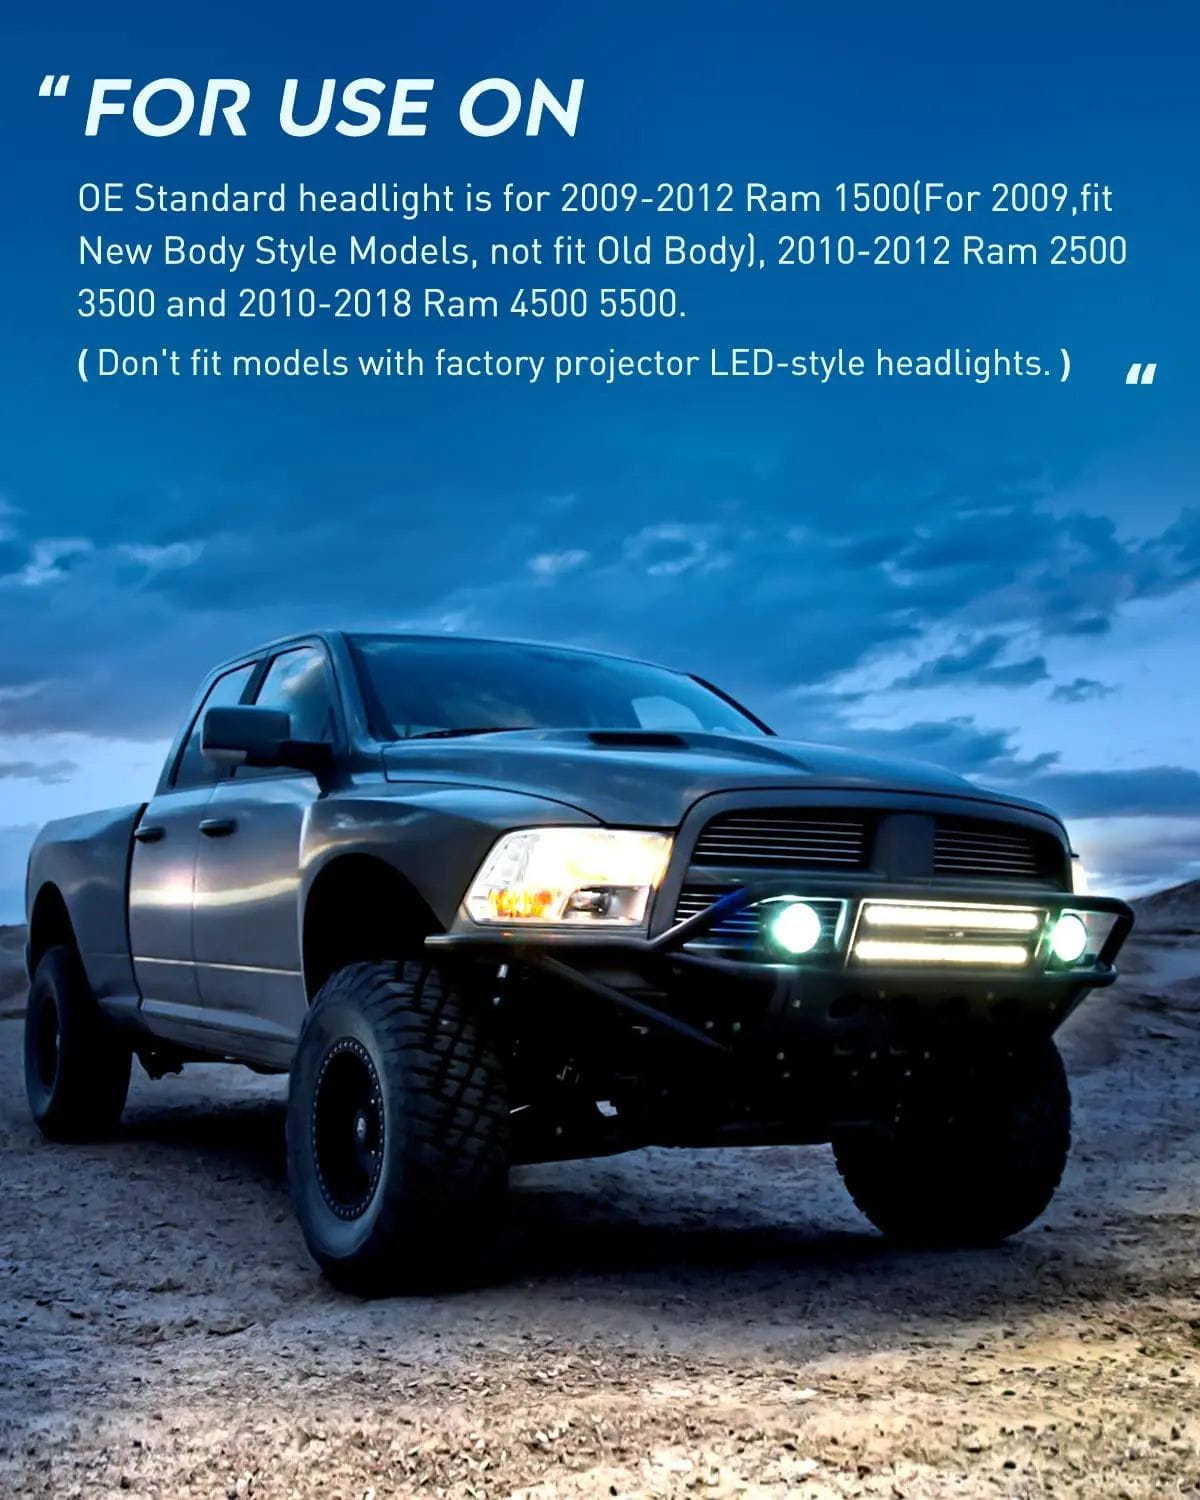 Headlight Assembly 2009-2018 Ram 1500 2500 3500 4500 5500 Headlight Assembly Chrome Case Clear Reflector